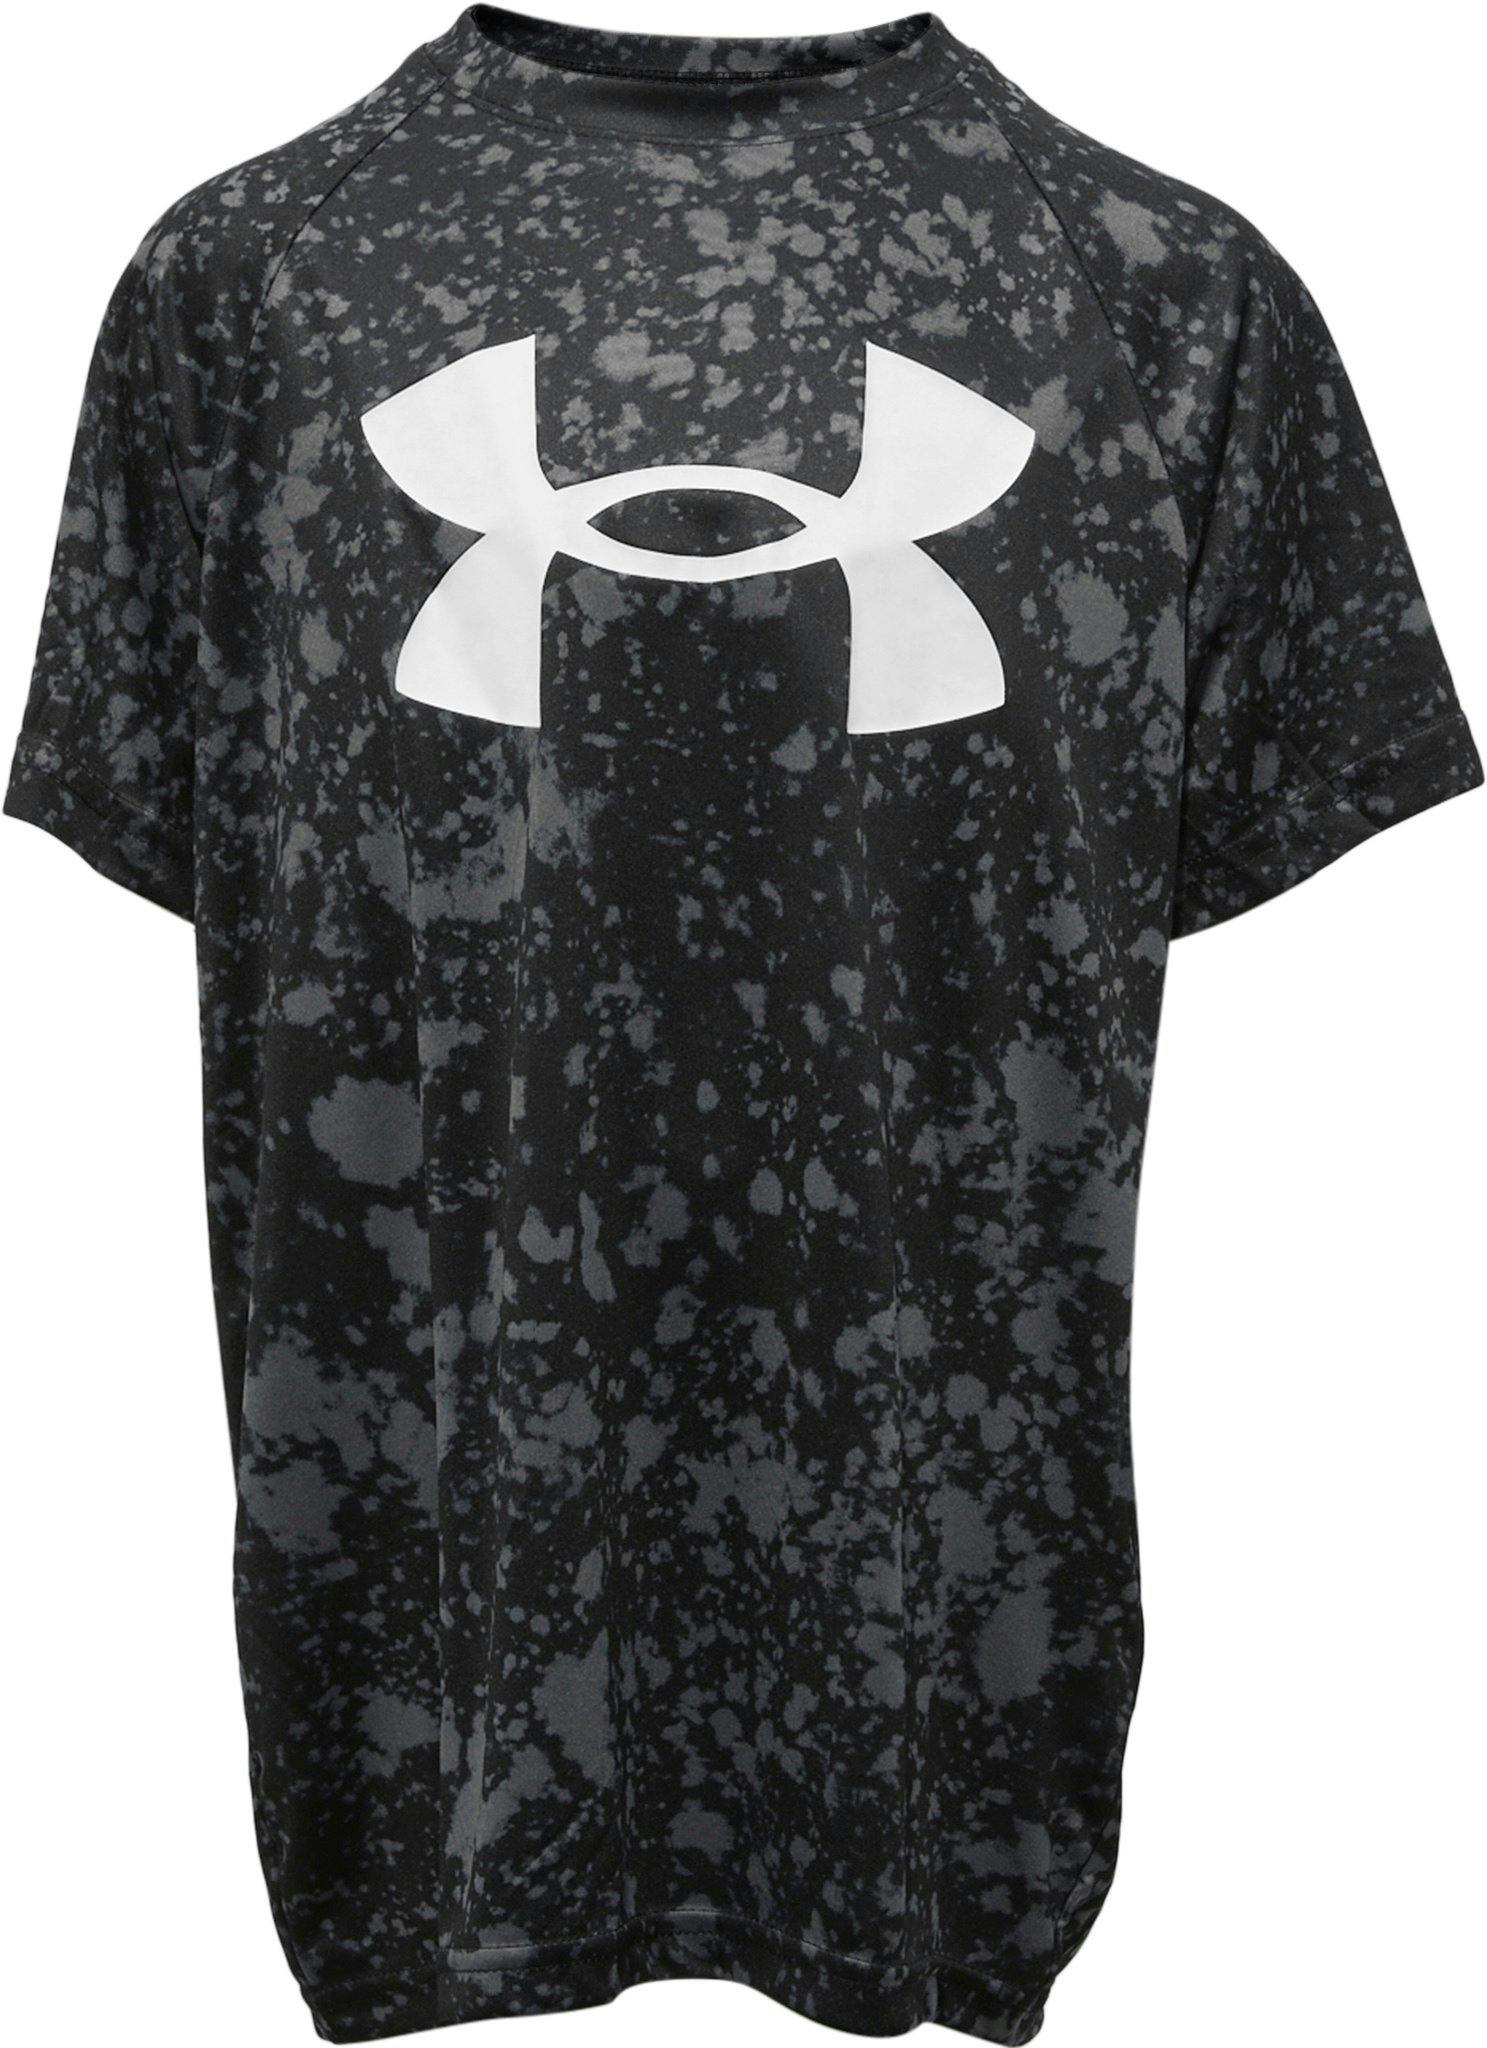 Product image for Tech Big Logo Printed Short Sleeve Training T-Shirt - Boys